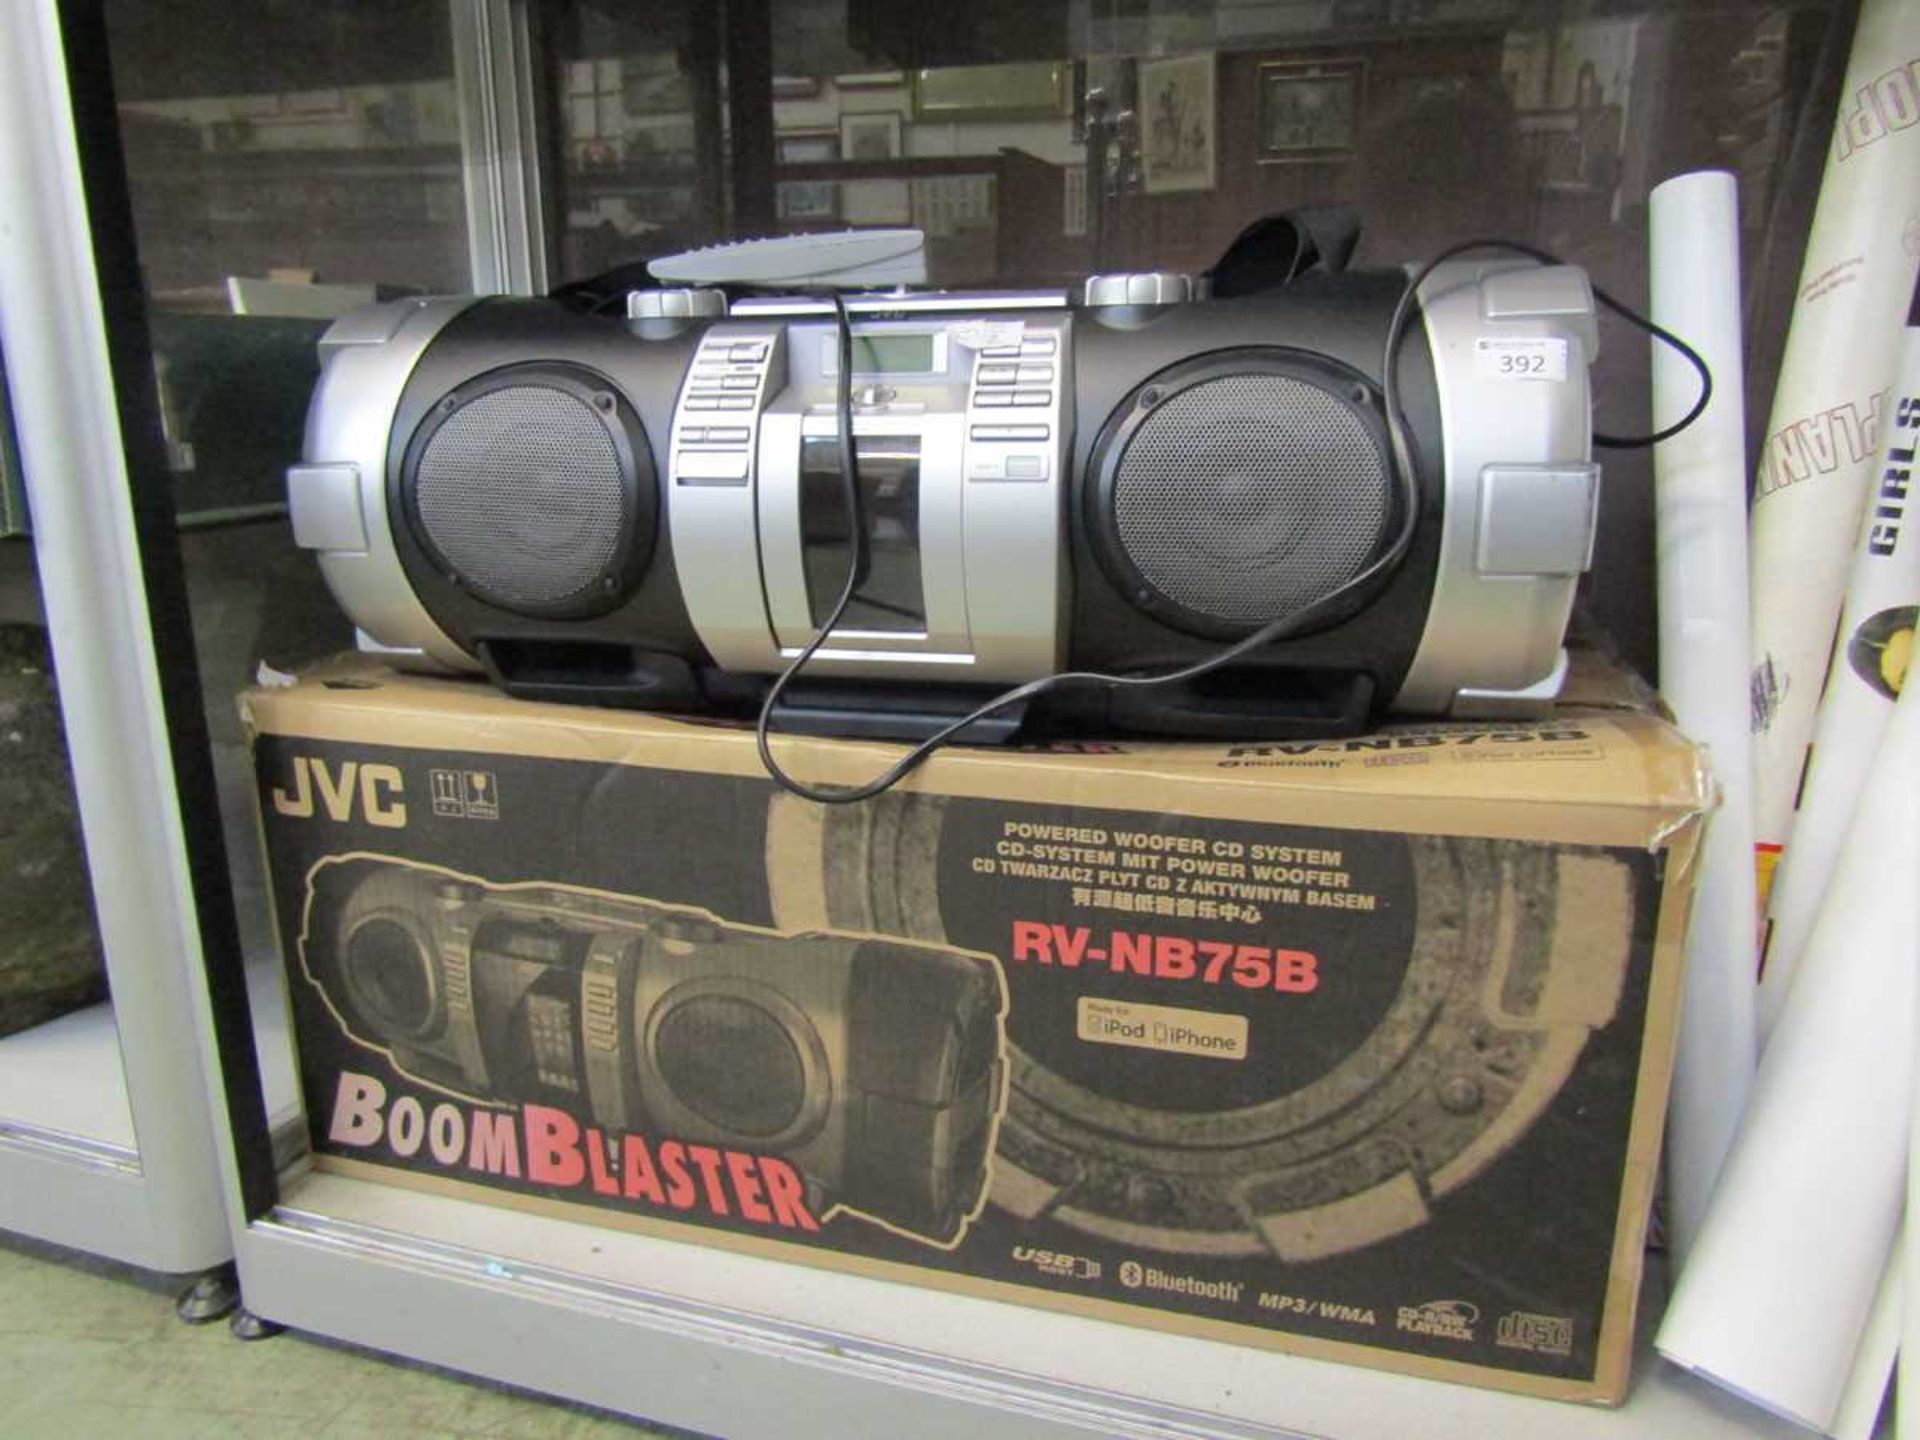 A JVC Portagram boombox style CD player/Ipod dock